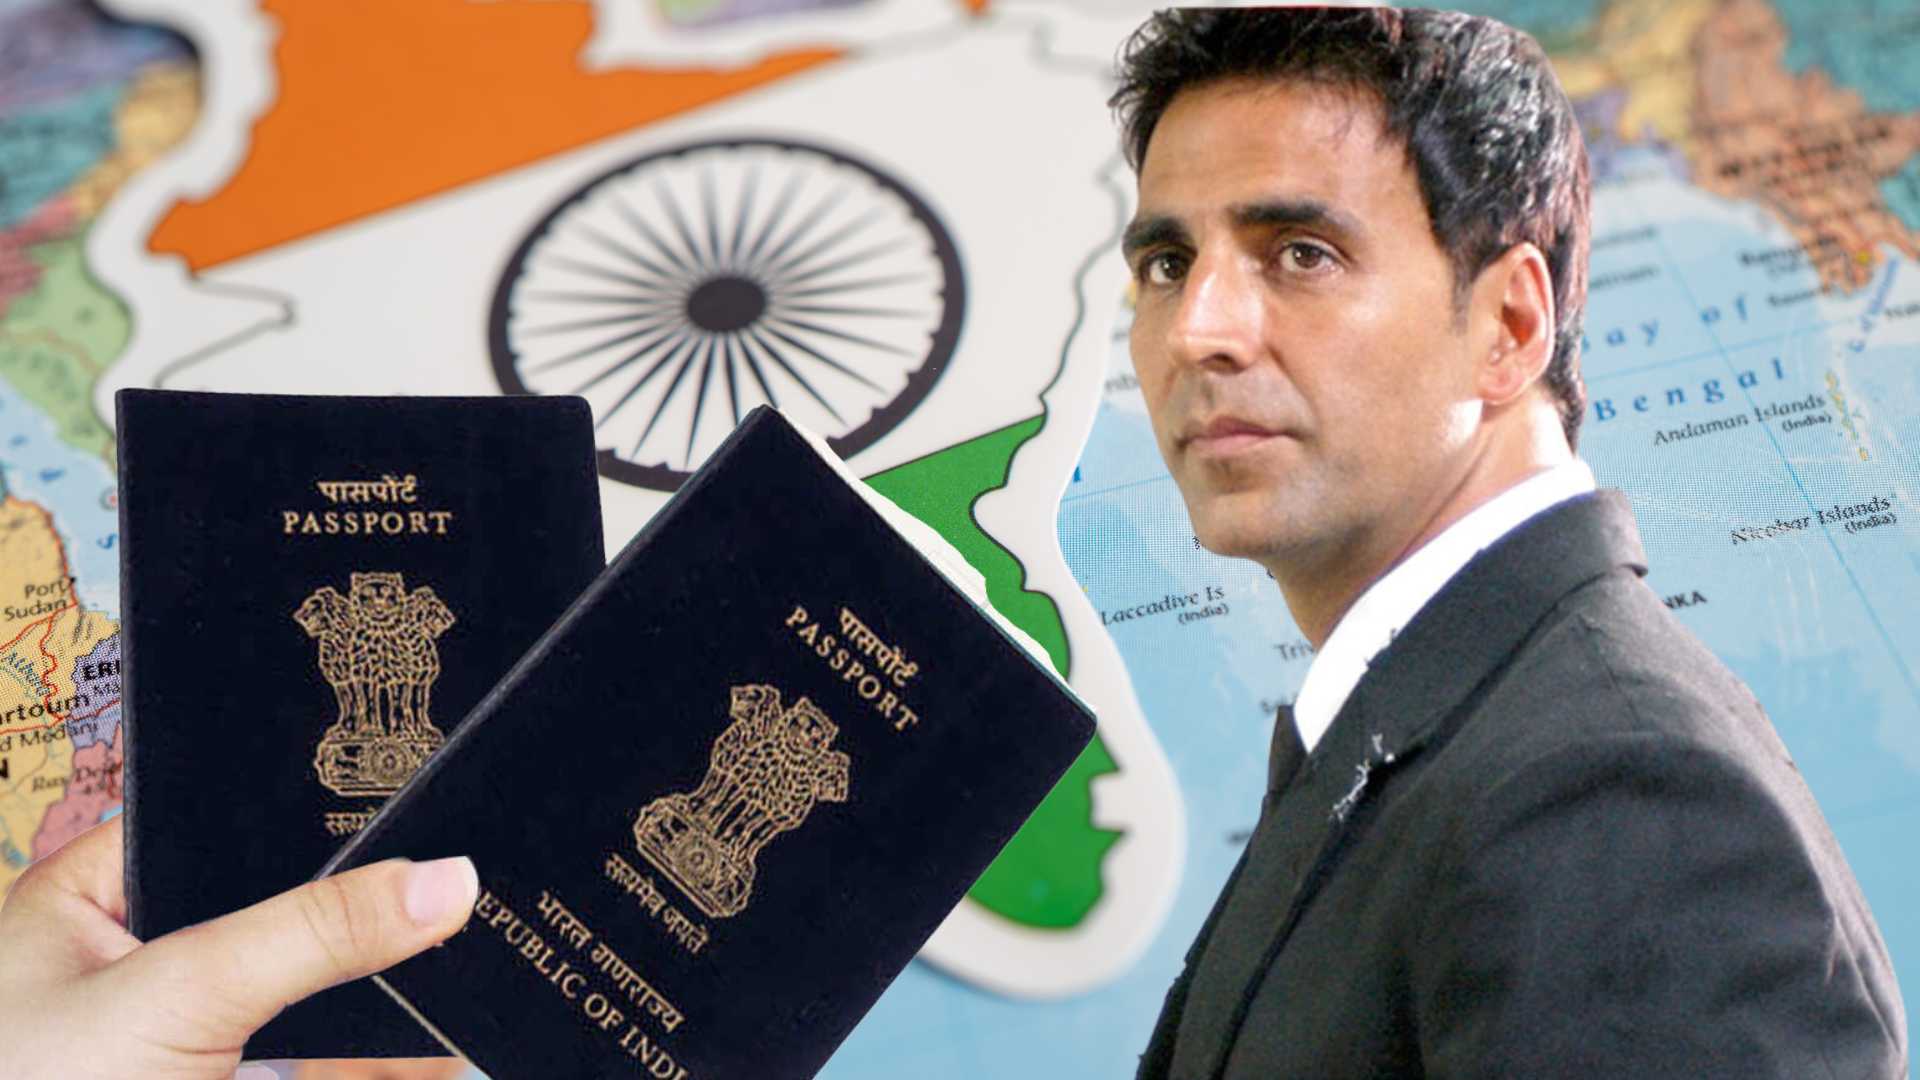 Akshay Kumar said he is going to get Indian passport very soon